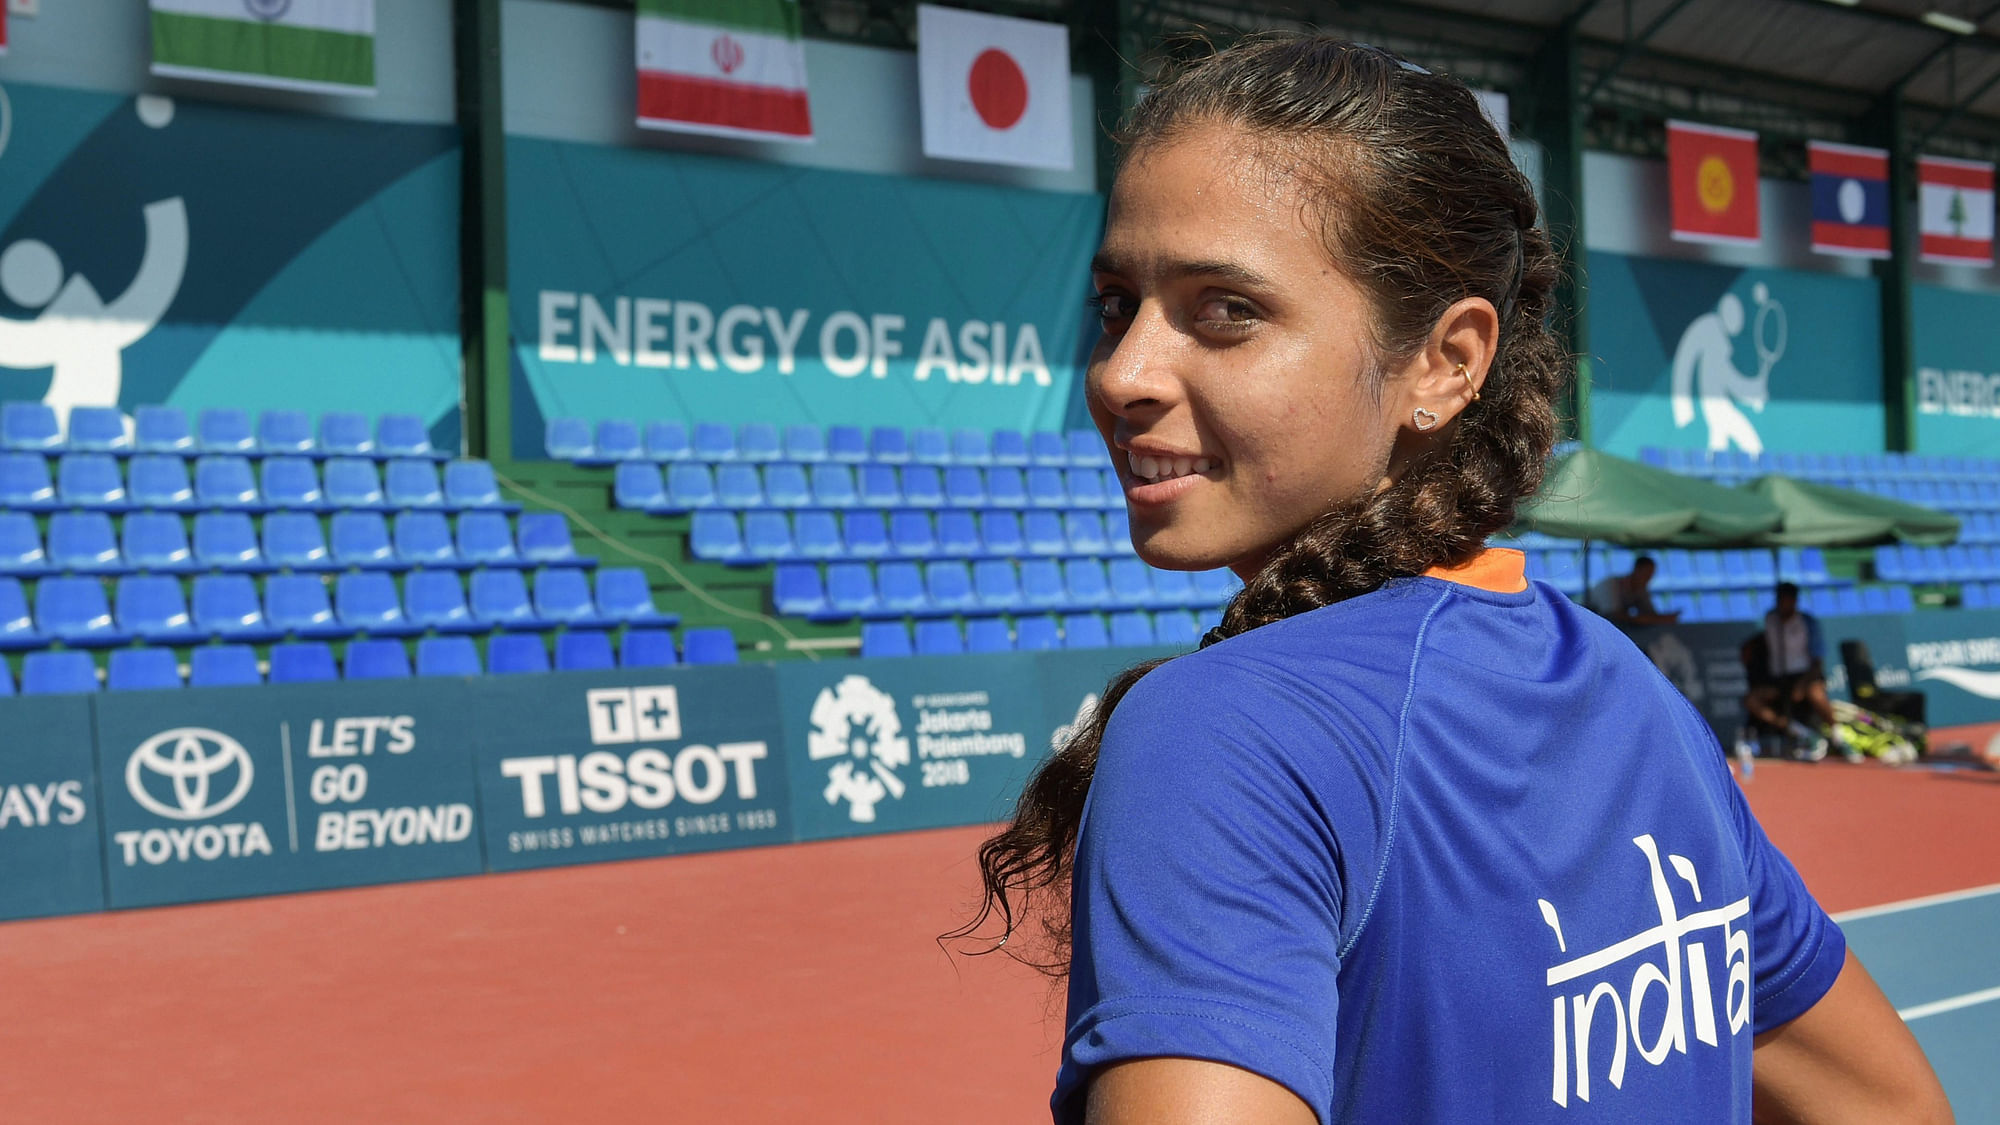 Asian Games 2018: Ankita Raina has won the bronze in the women’s singles tennis event.